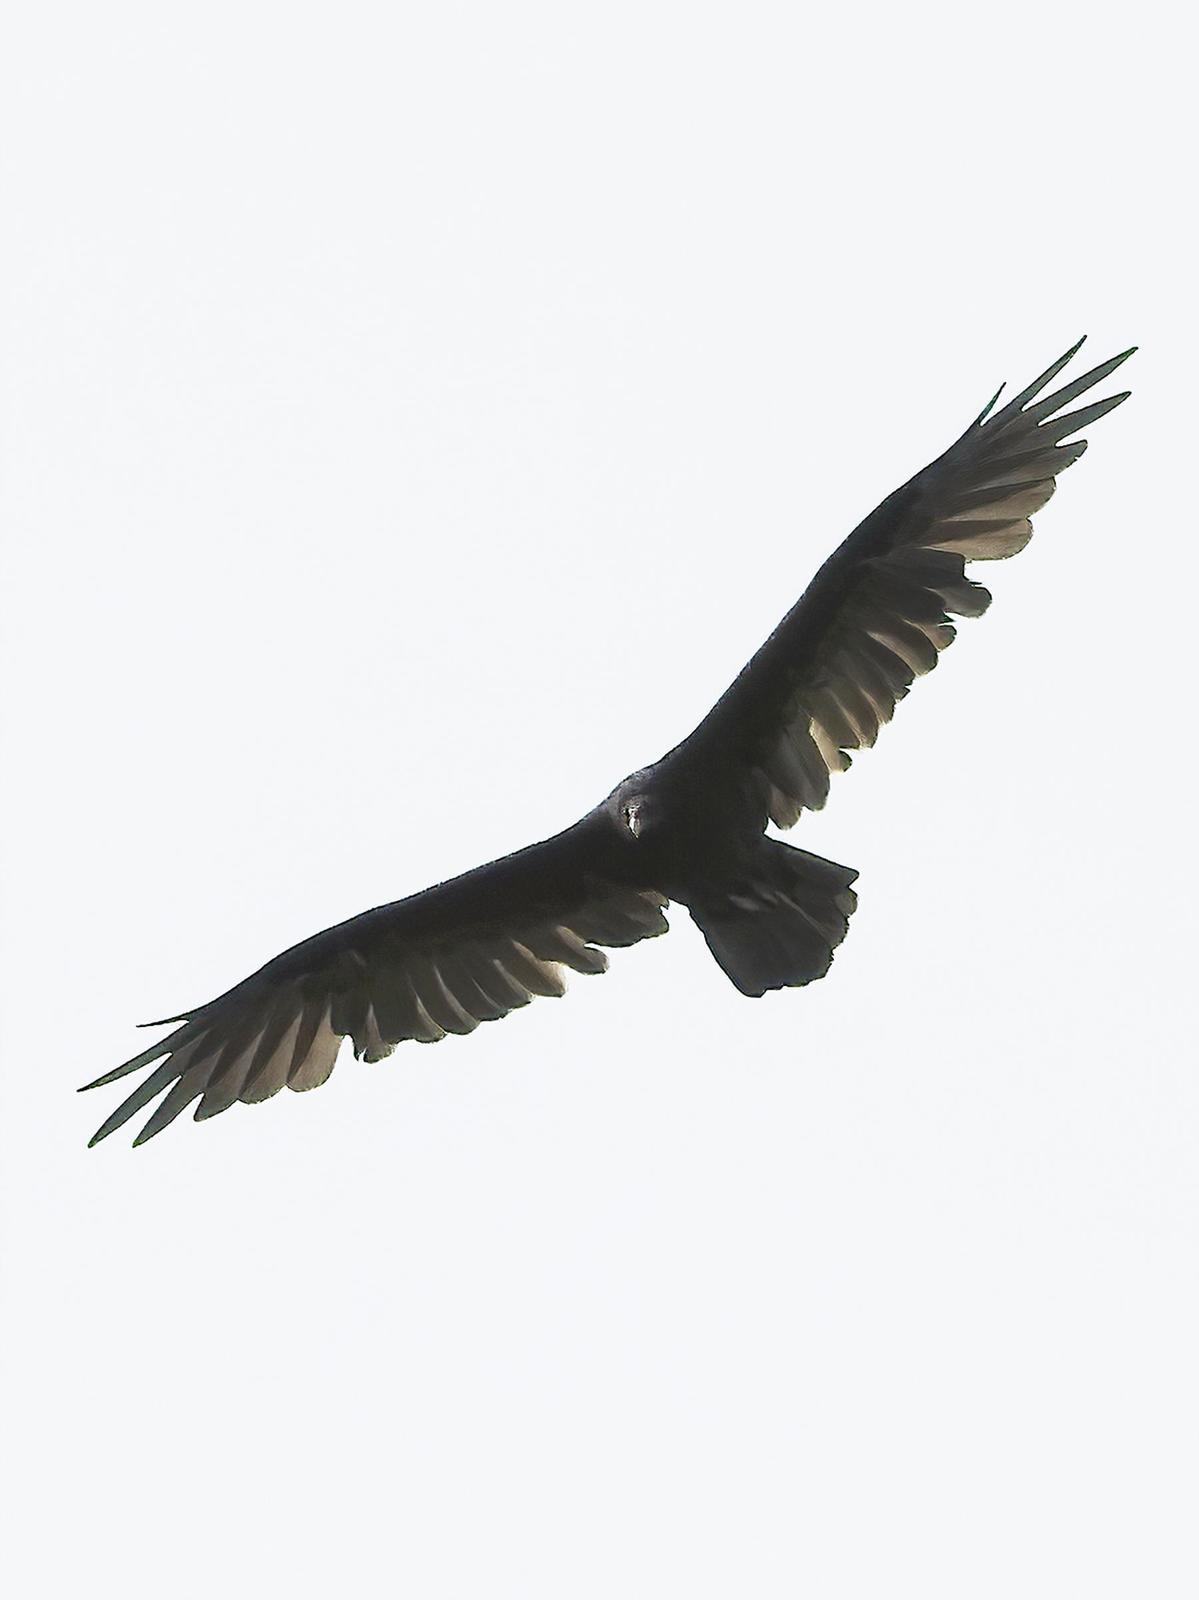 Turkey Vulture (Northern) Photo by Dan Tallman